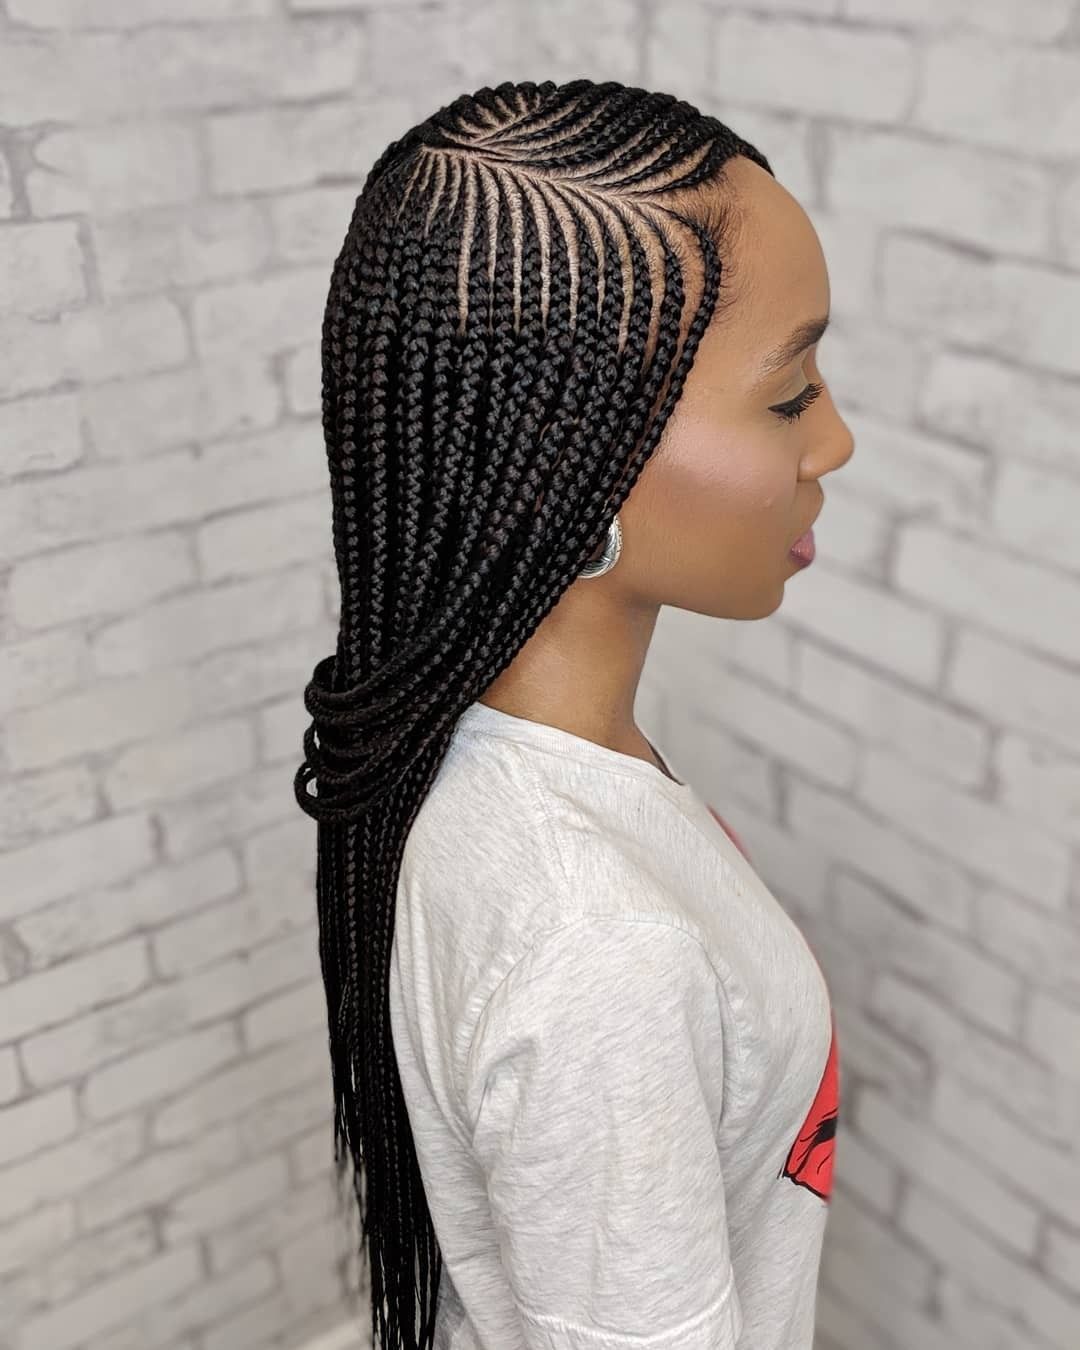 Long braids hairstyles -   8 hairstyles Cornrow cornbraids ideas